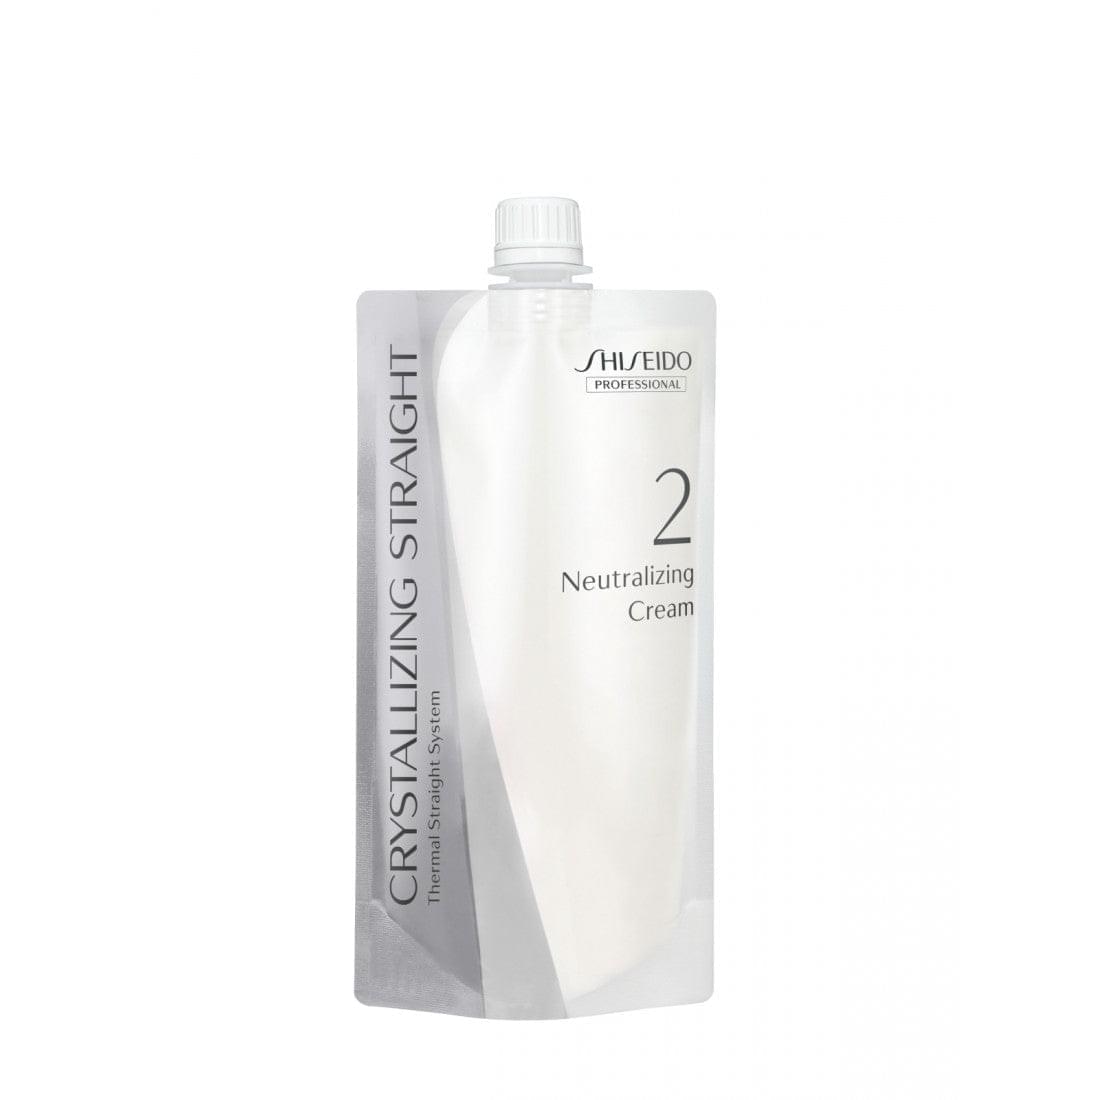 Crystallizing Straight H1 – 400g + Nutralising Cream 400g For Natural Hair Resistance